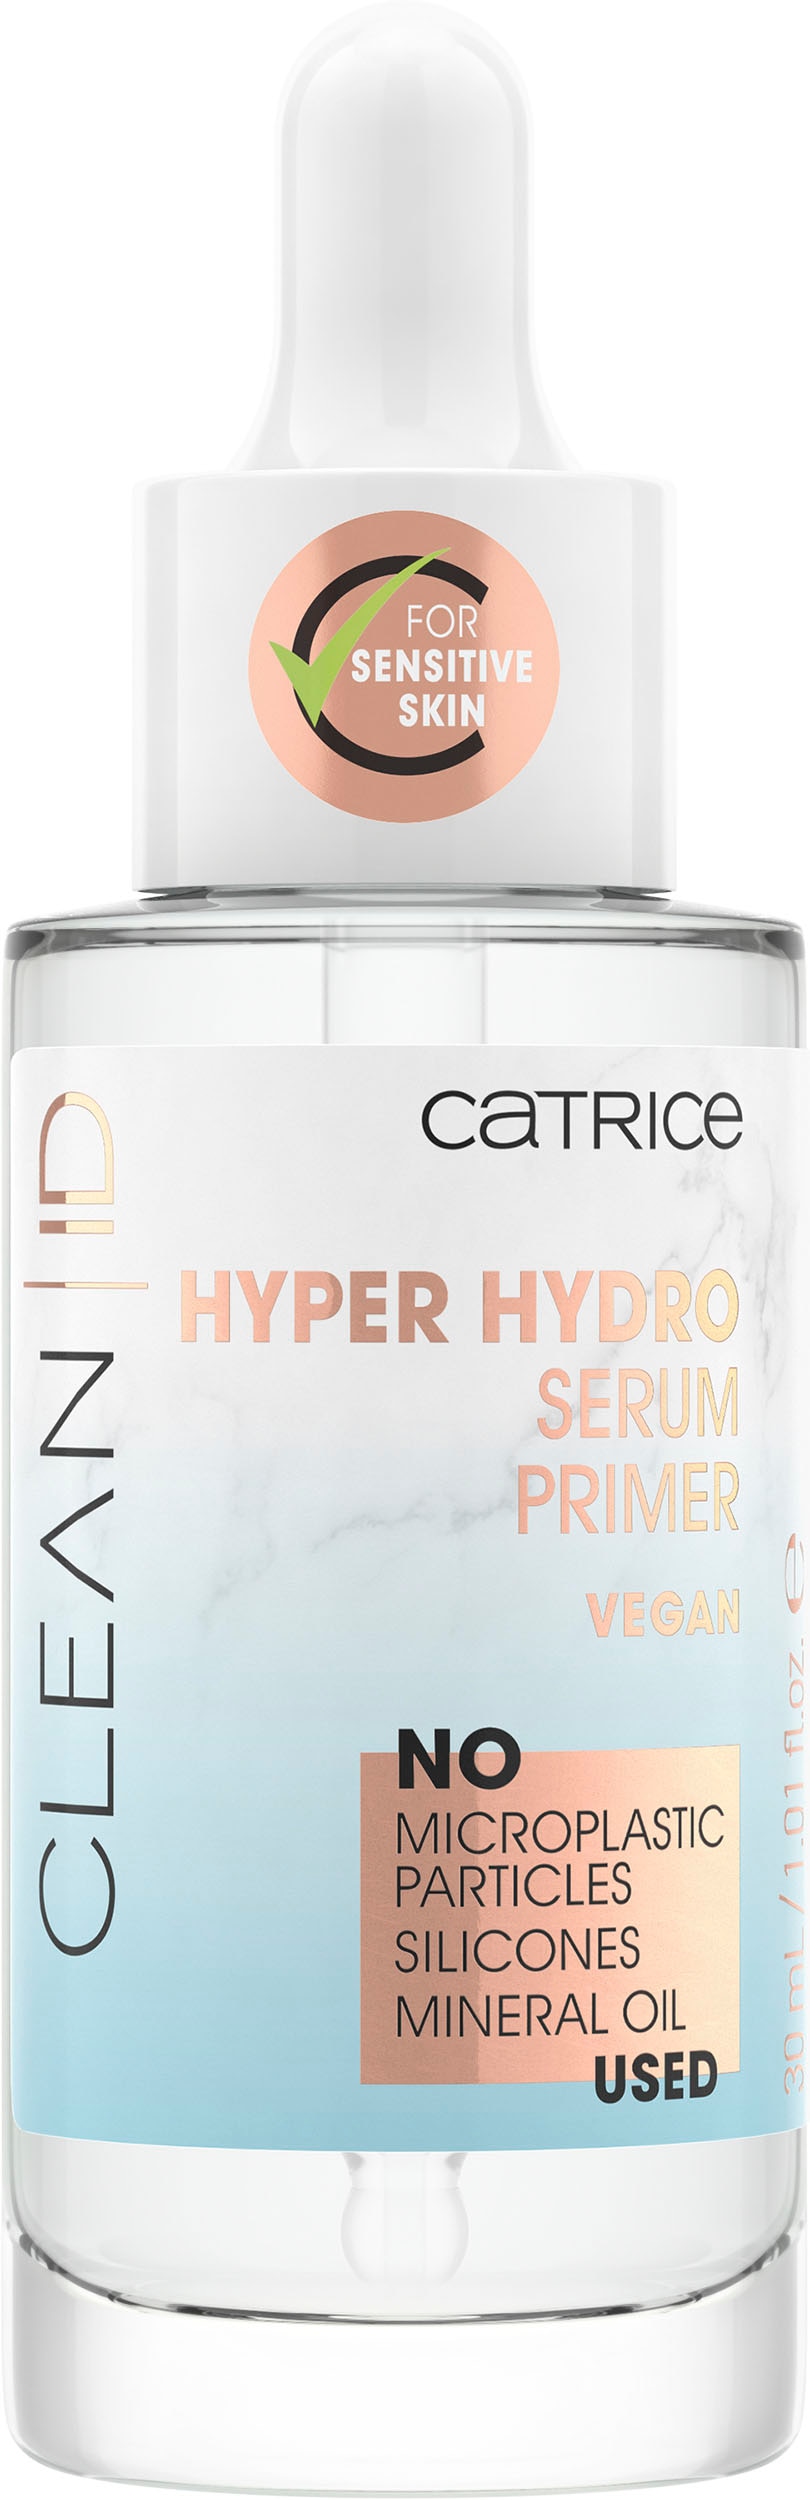 Primer«, Primer ID Hydro »Catrice 3 Clean (Set, tlg.) Catrice OTTOversand bei Hyper Serum